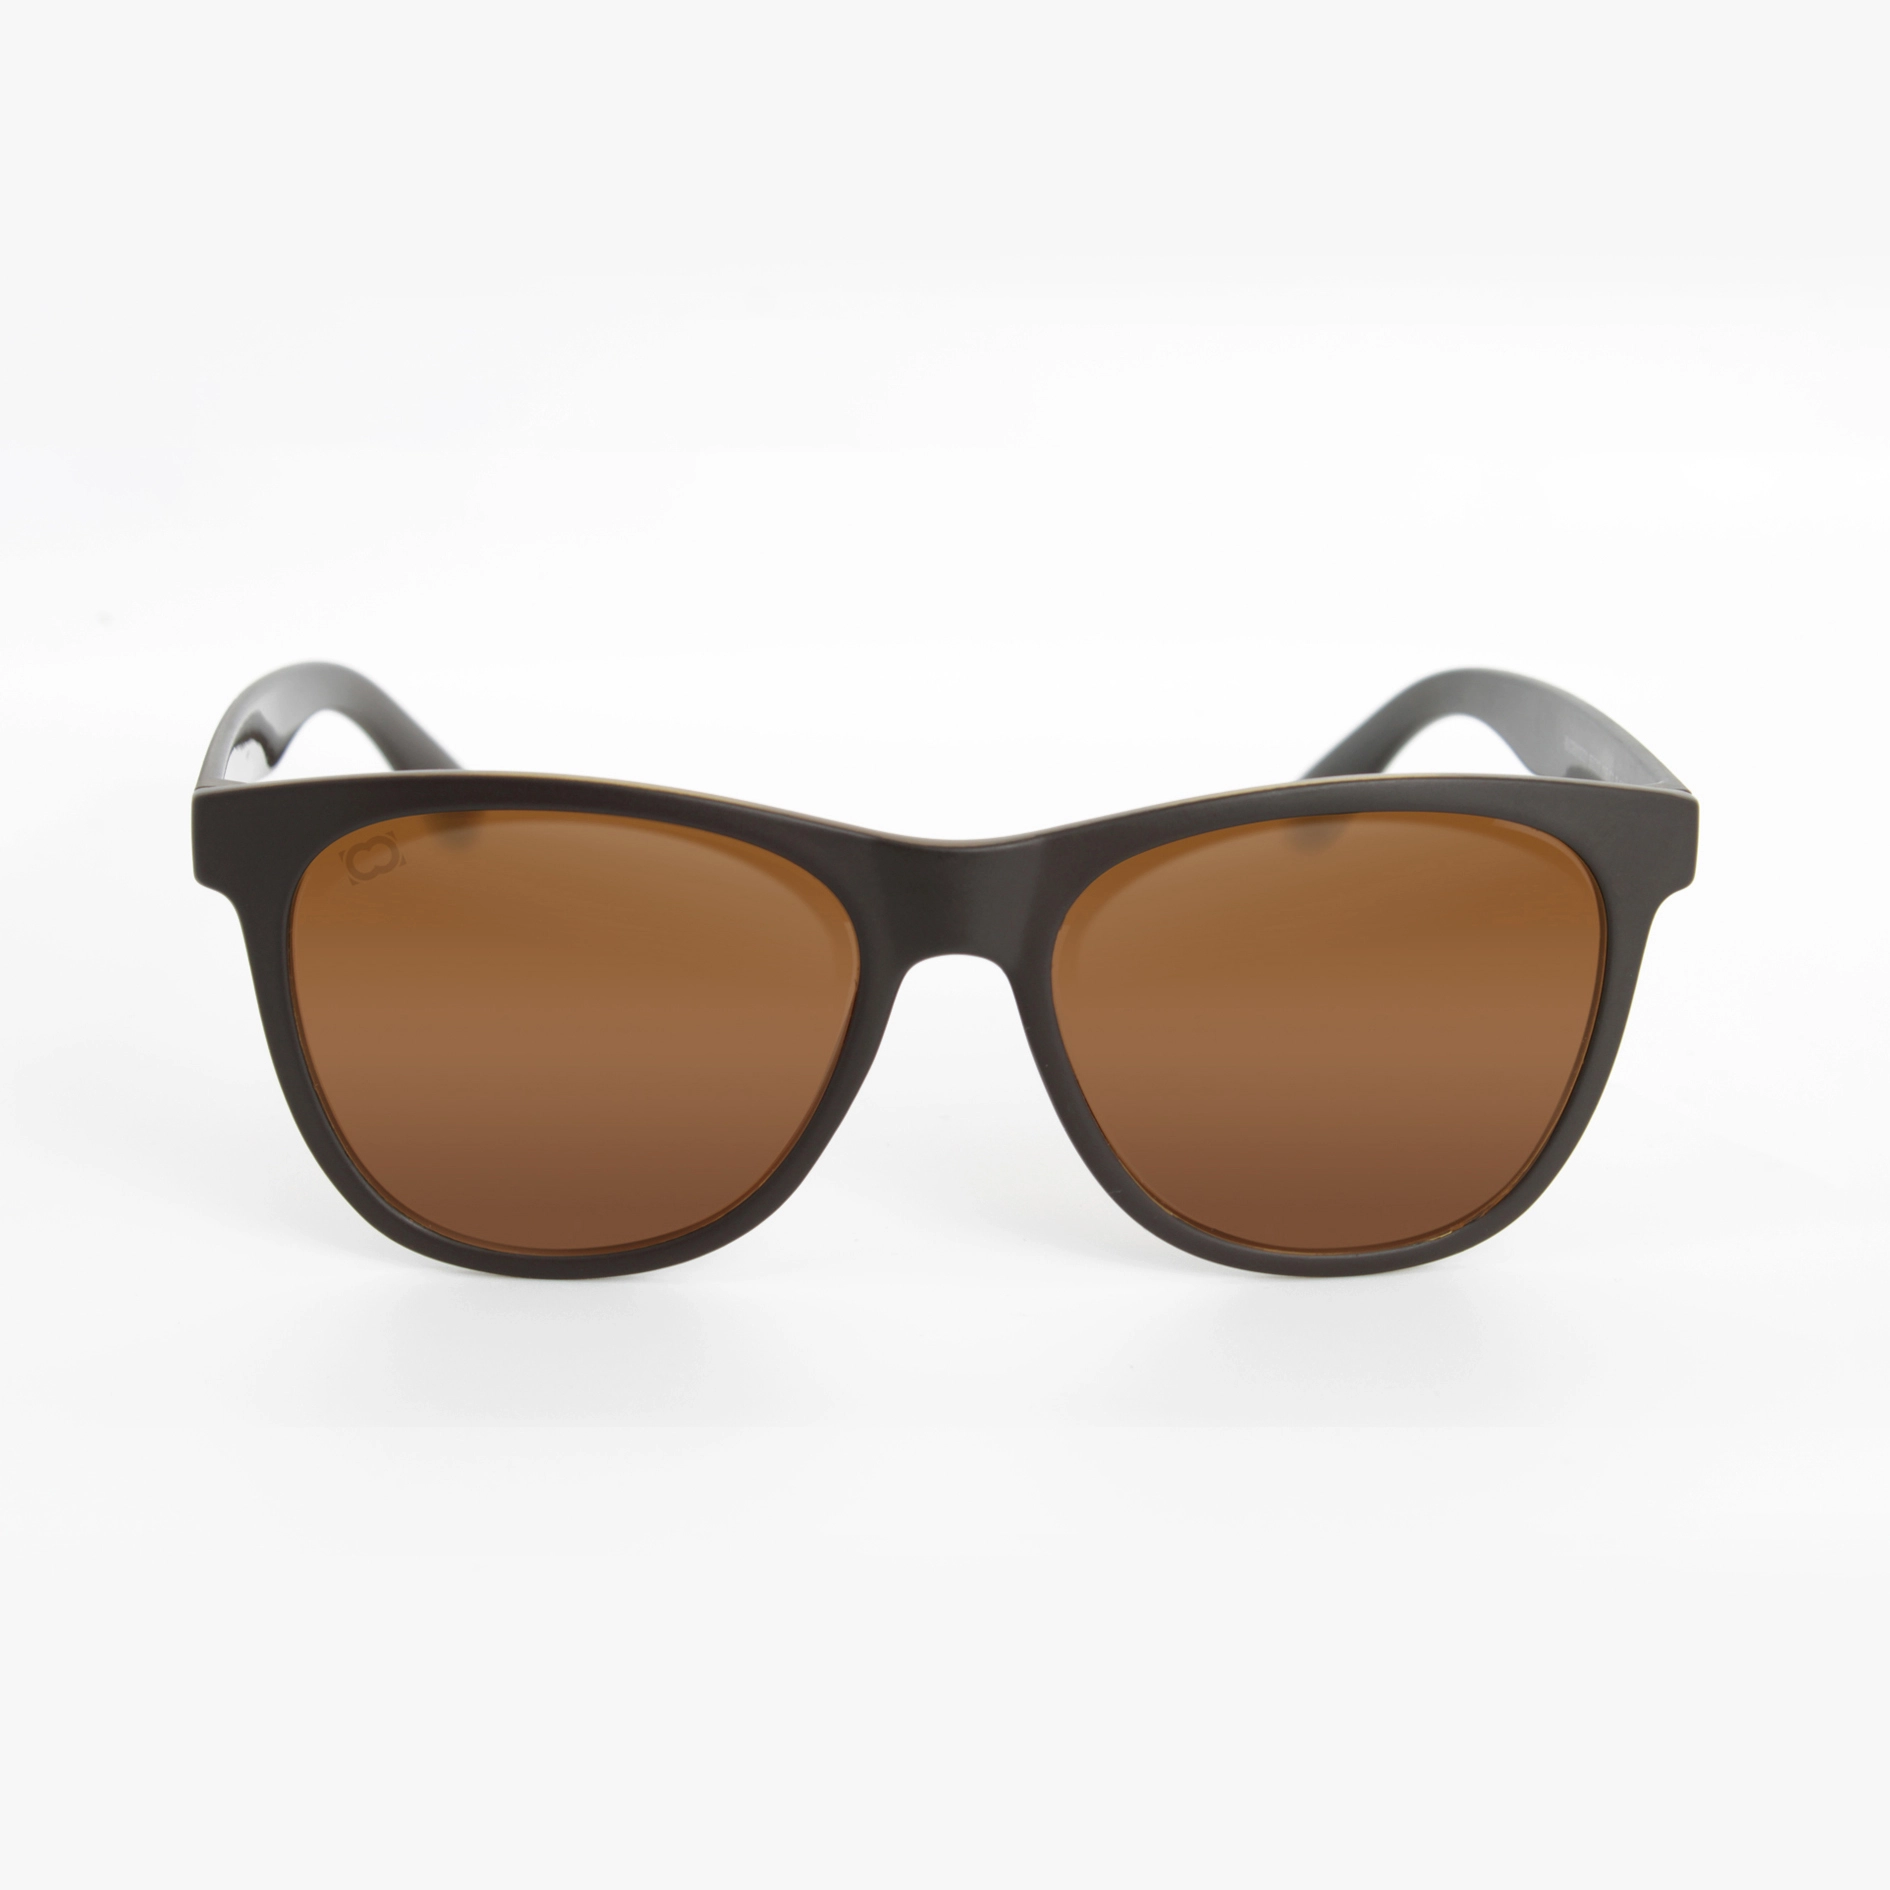 Buy Stylish Sunglasses Online